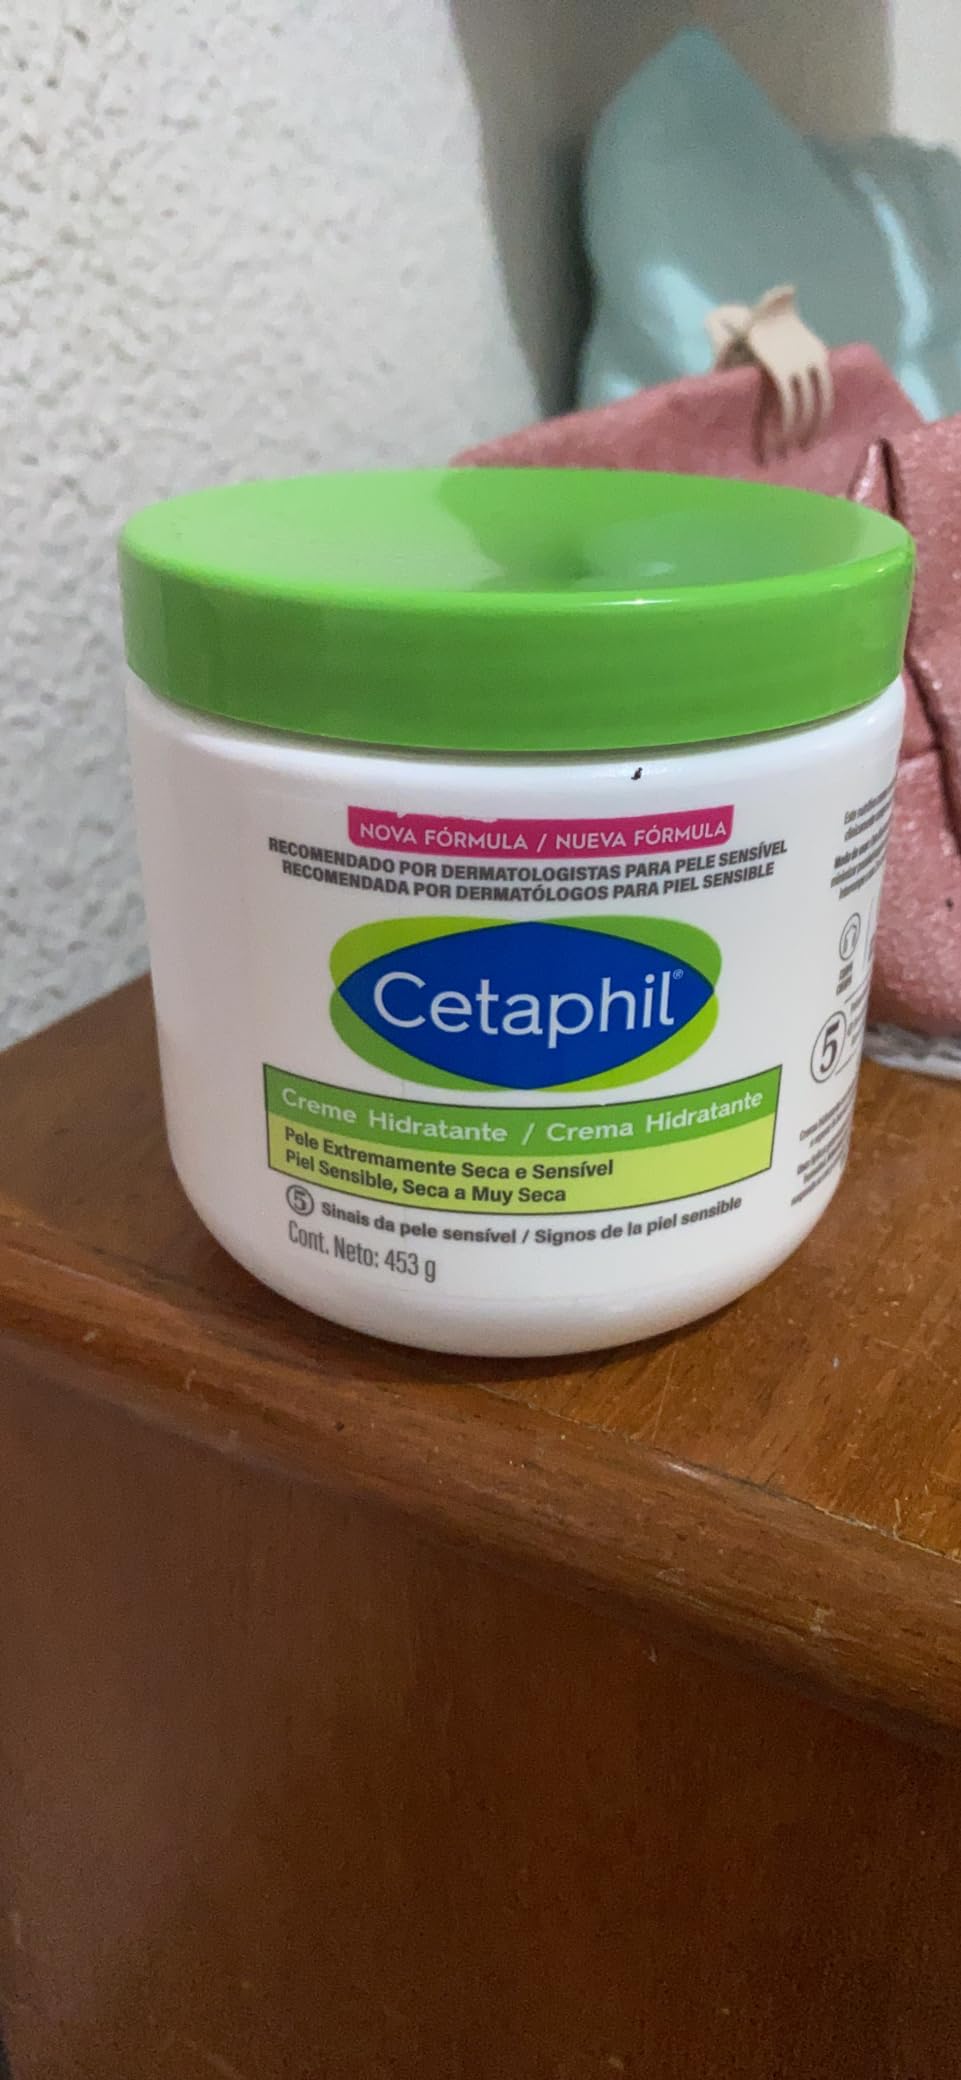 Cetaphil Creme Hidratante imagem do cliente